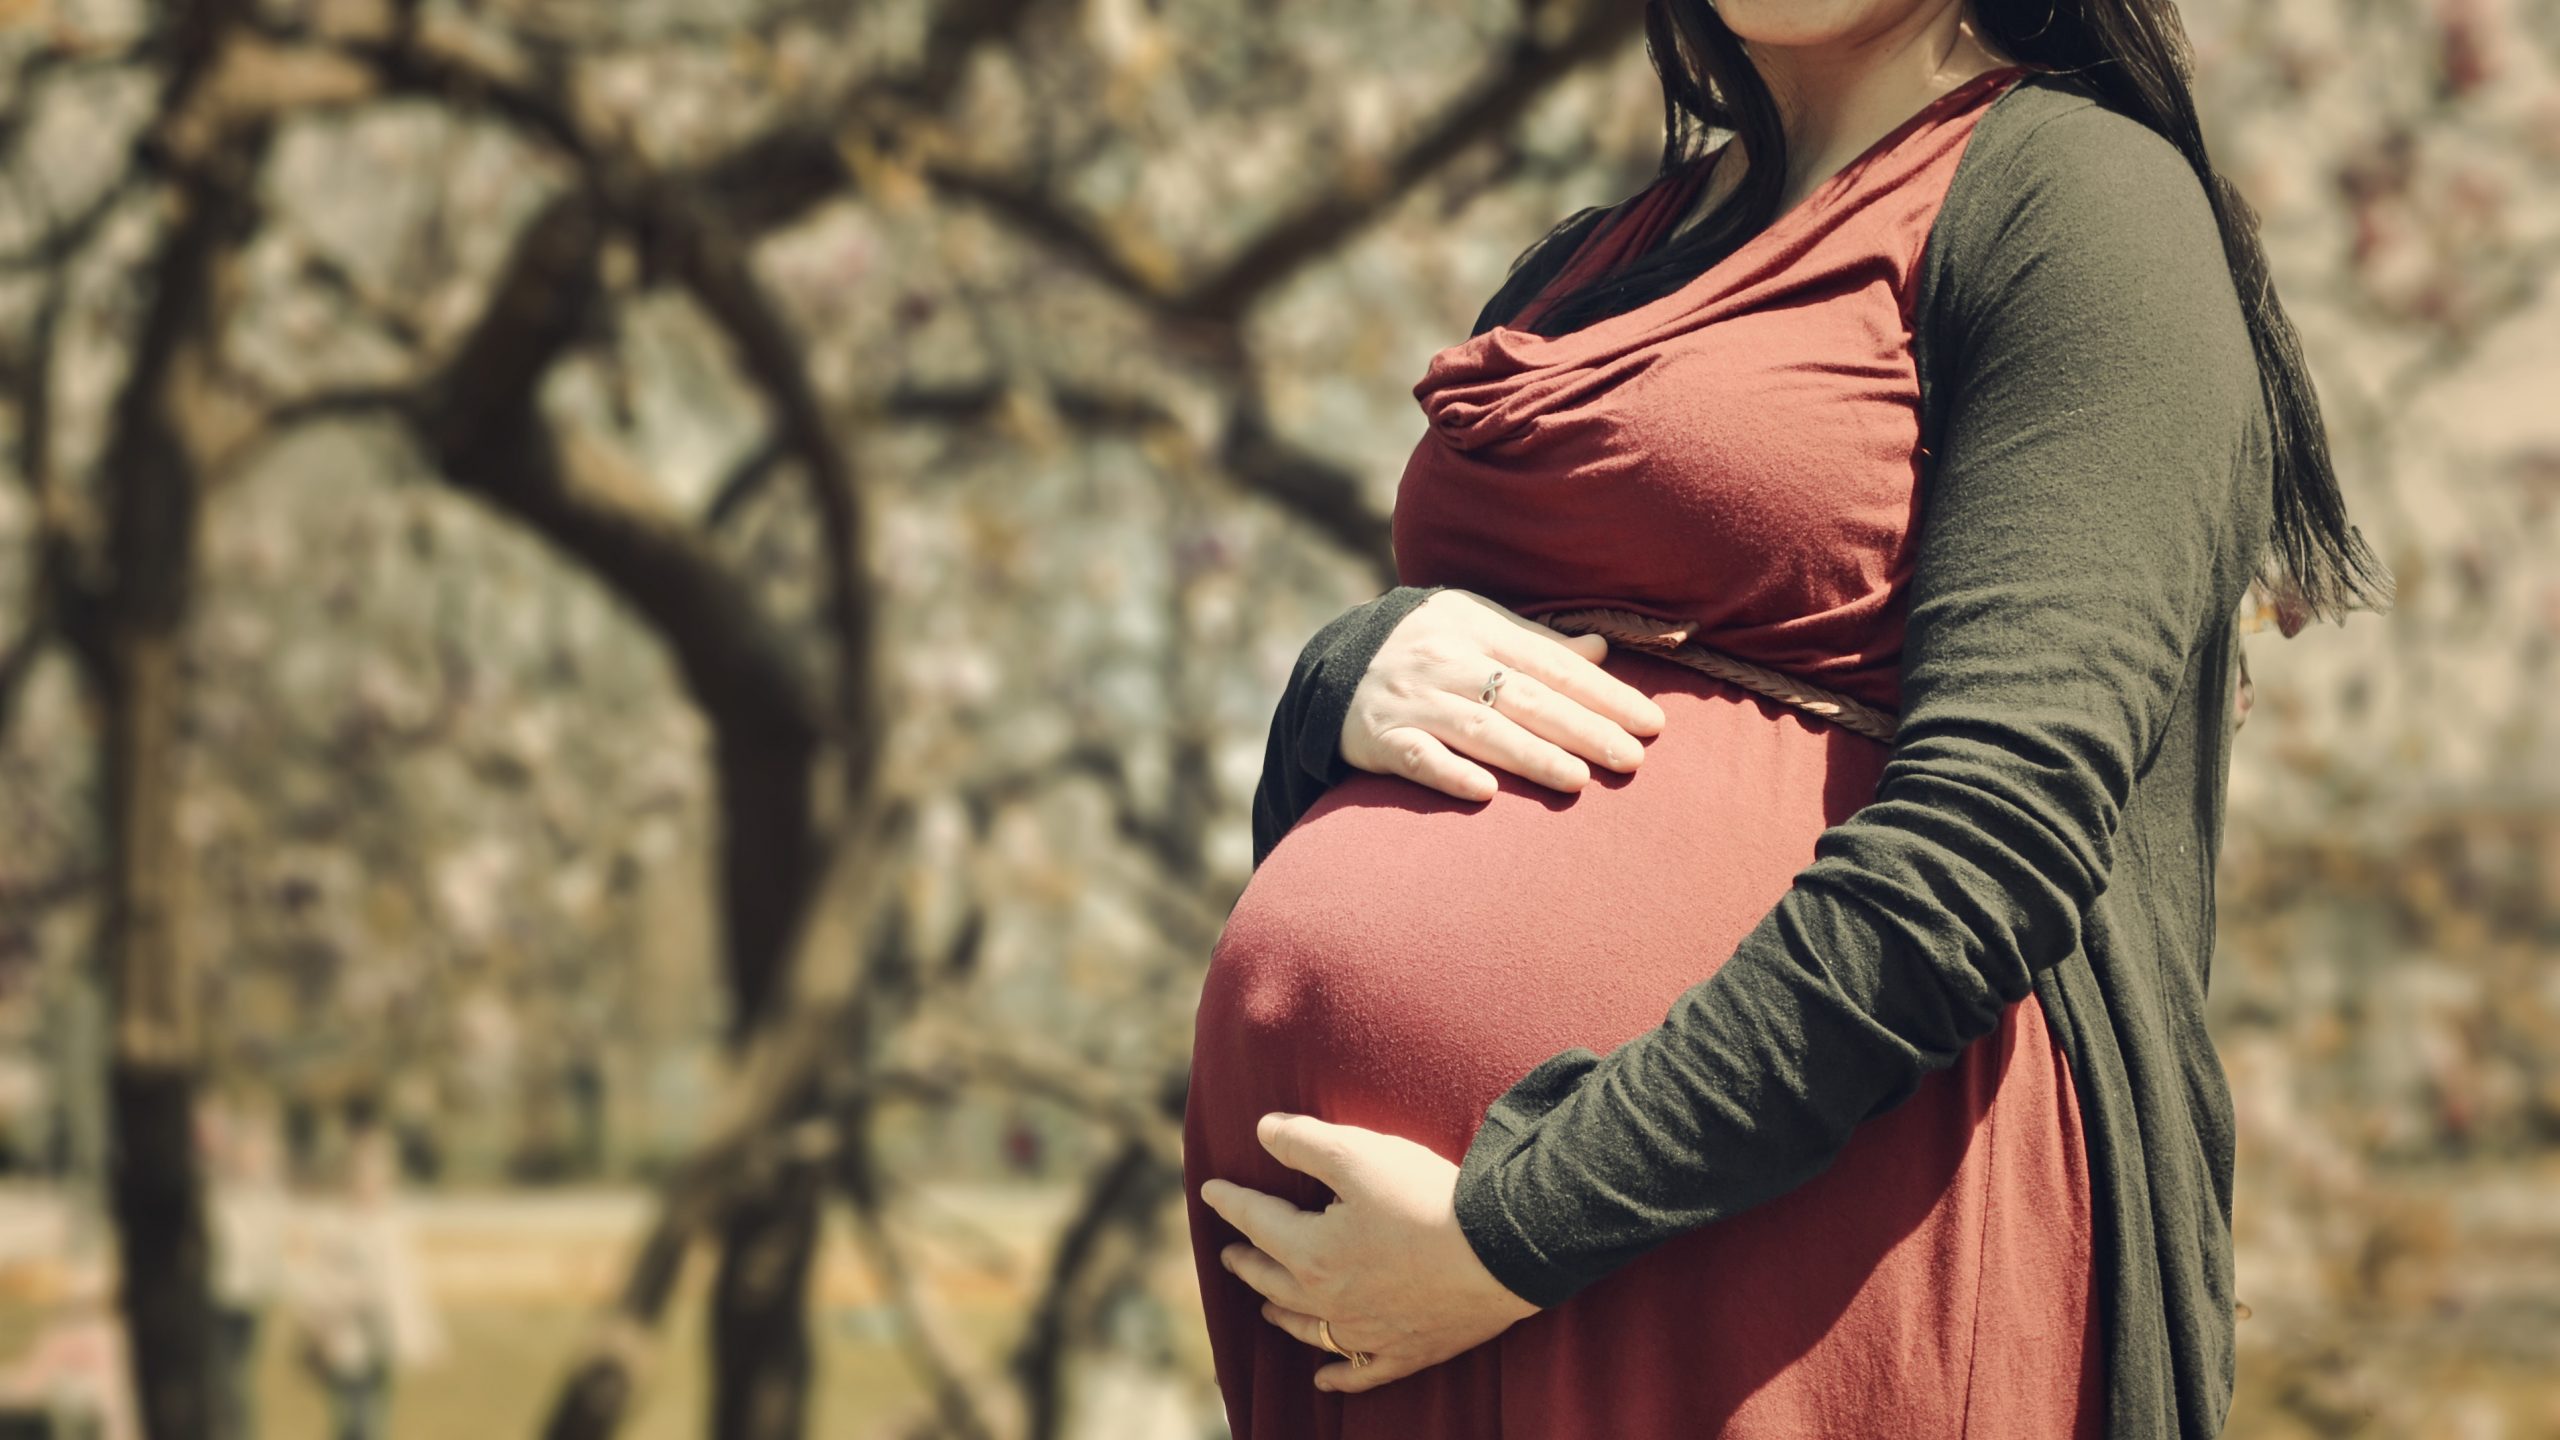 Sviluppo del feto in gravidanza: i polmoni